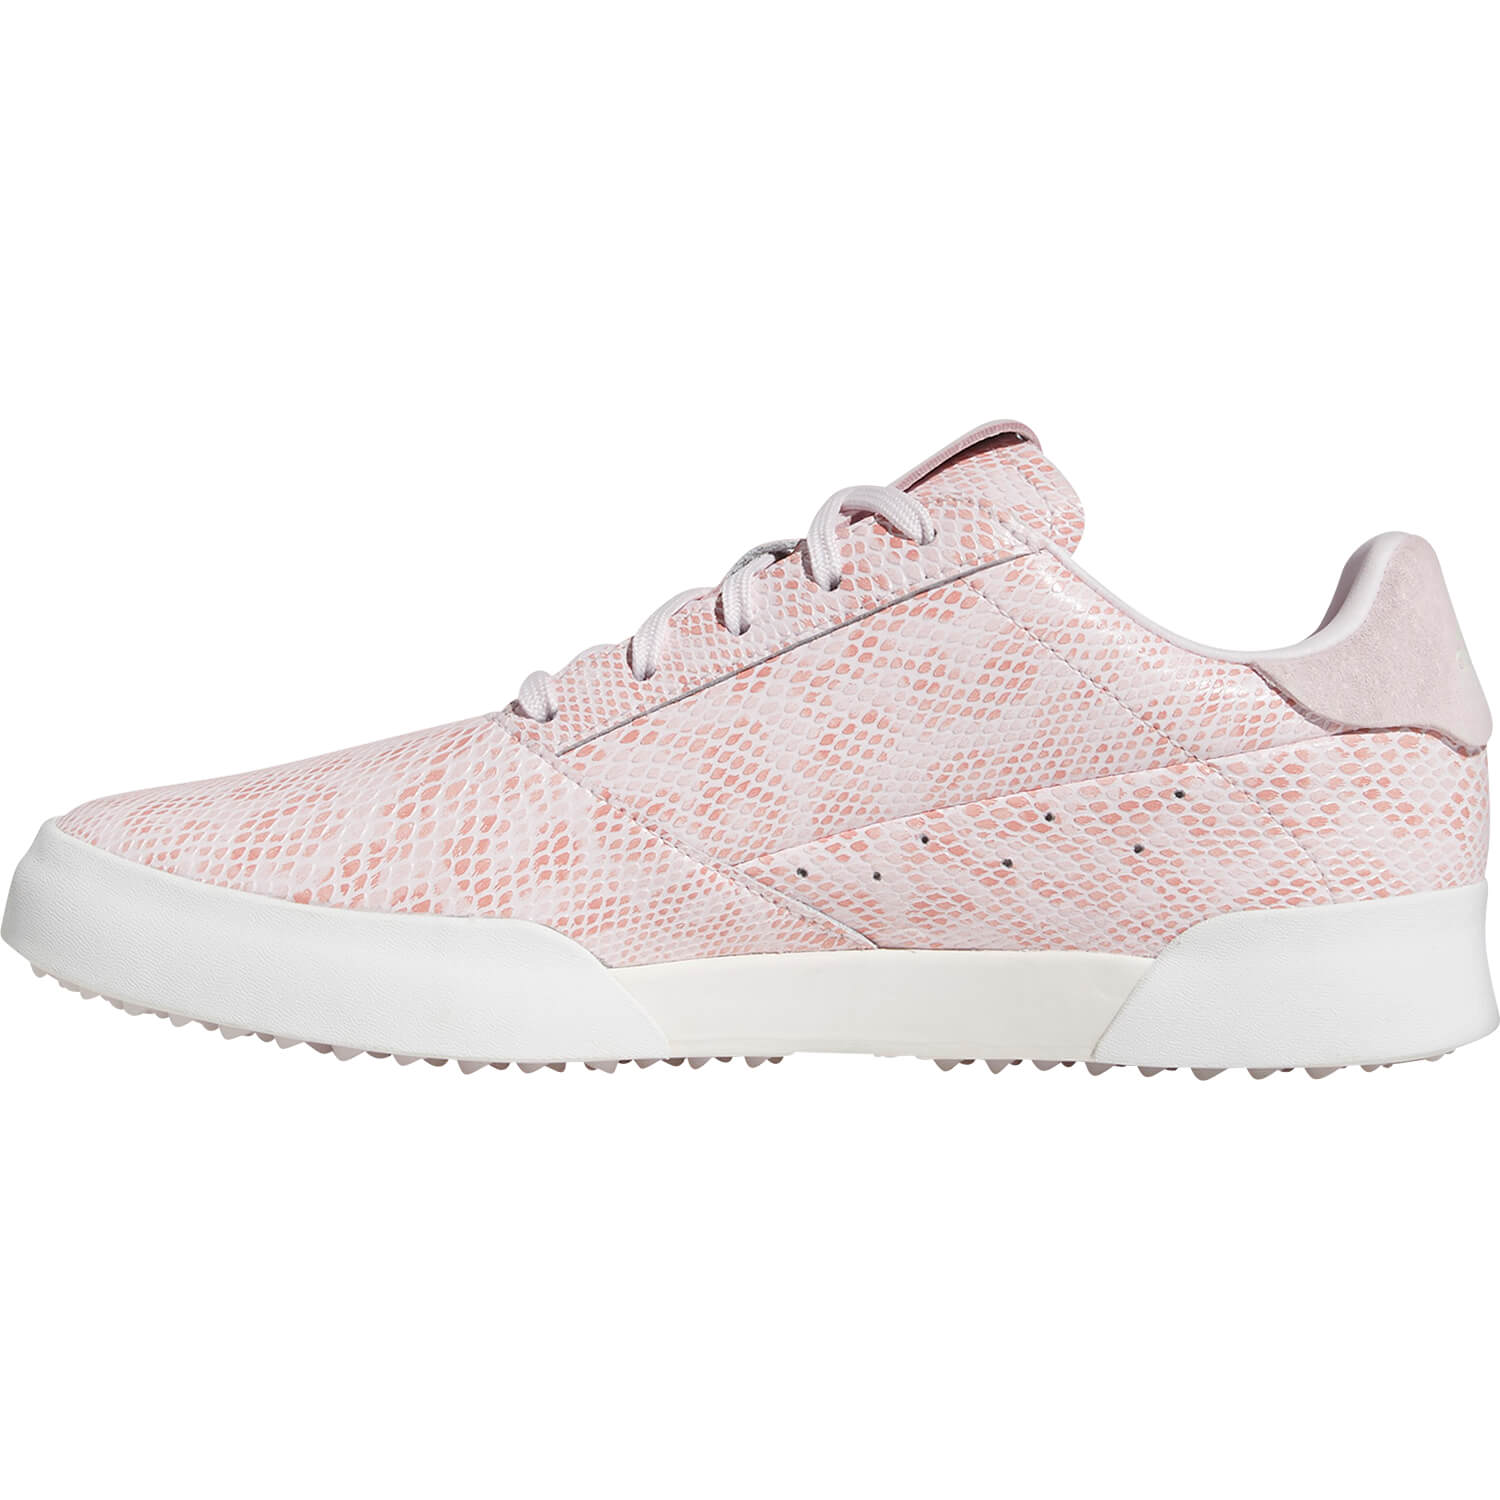 Adidas Adicross Retro Pink/White Damen